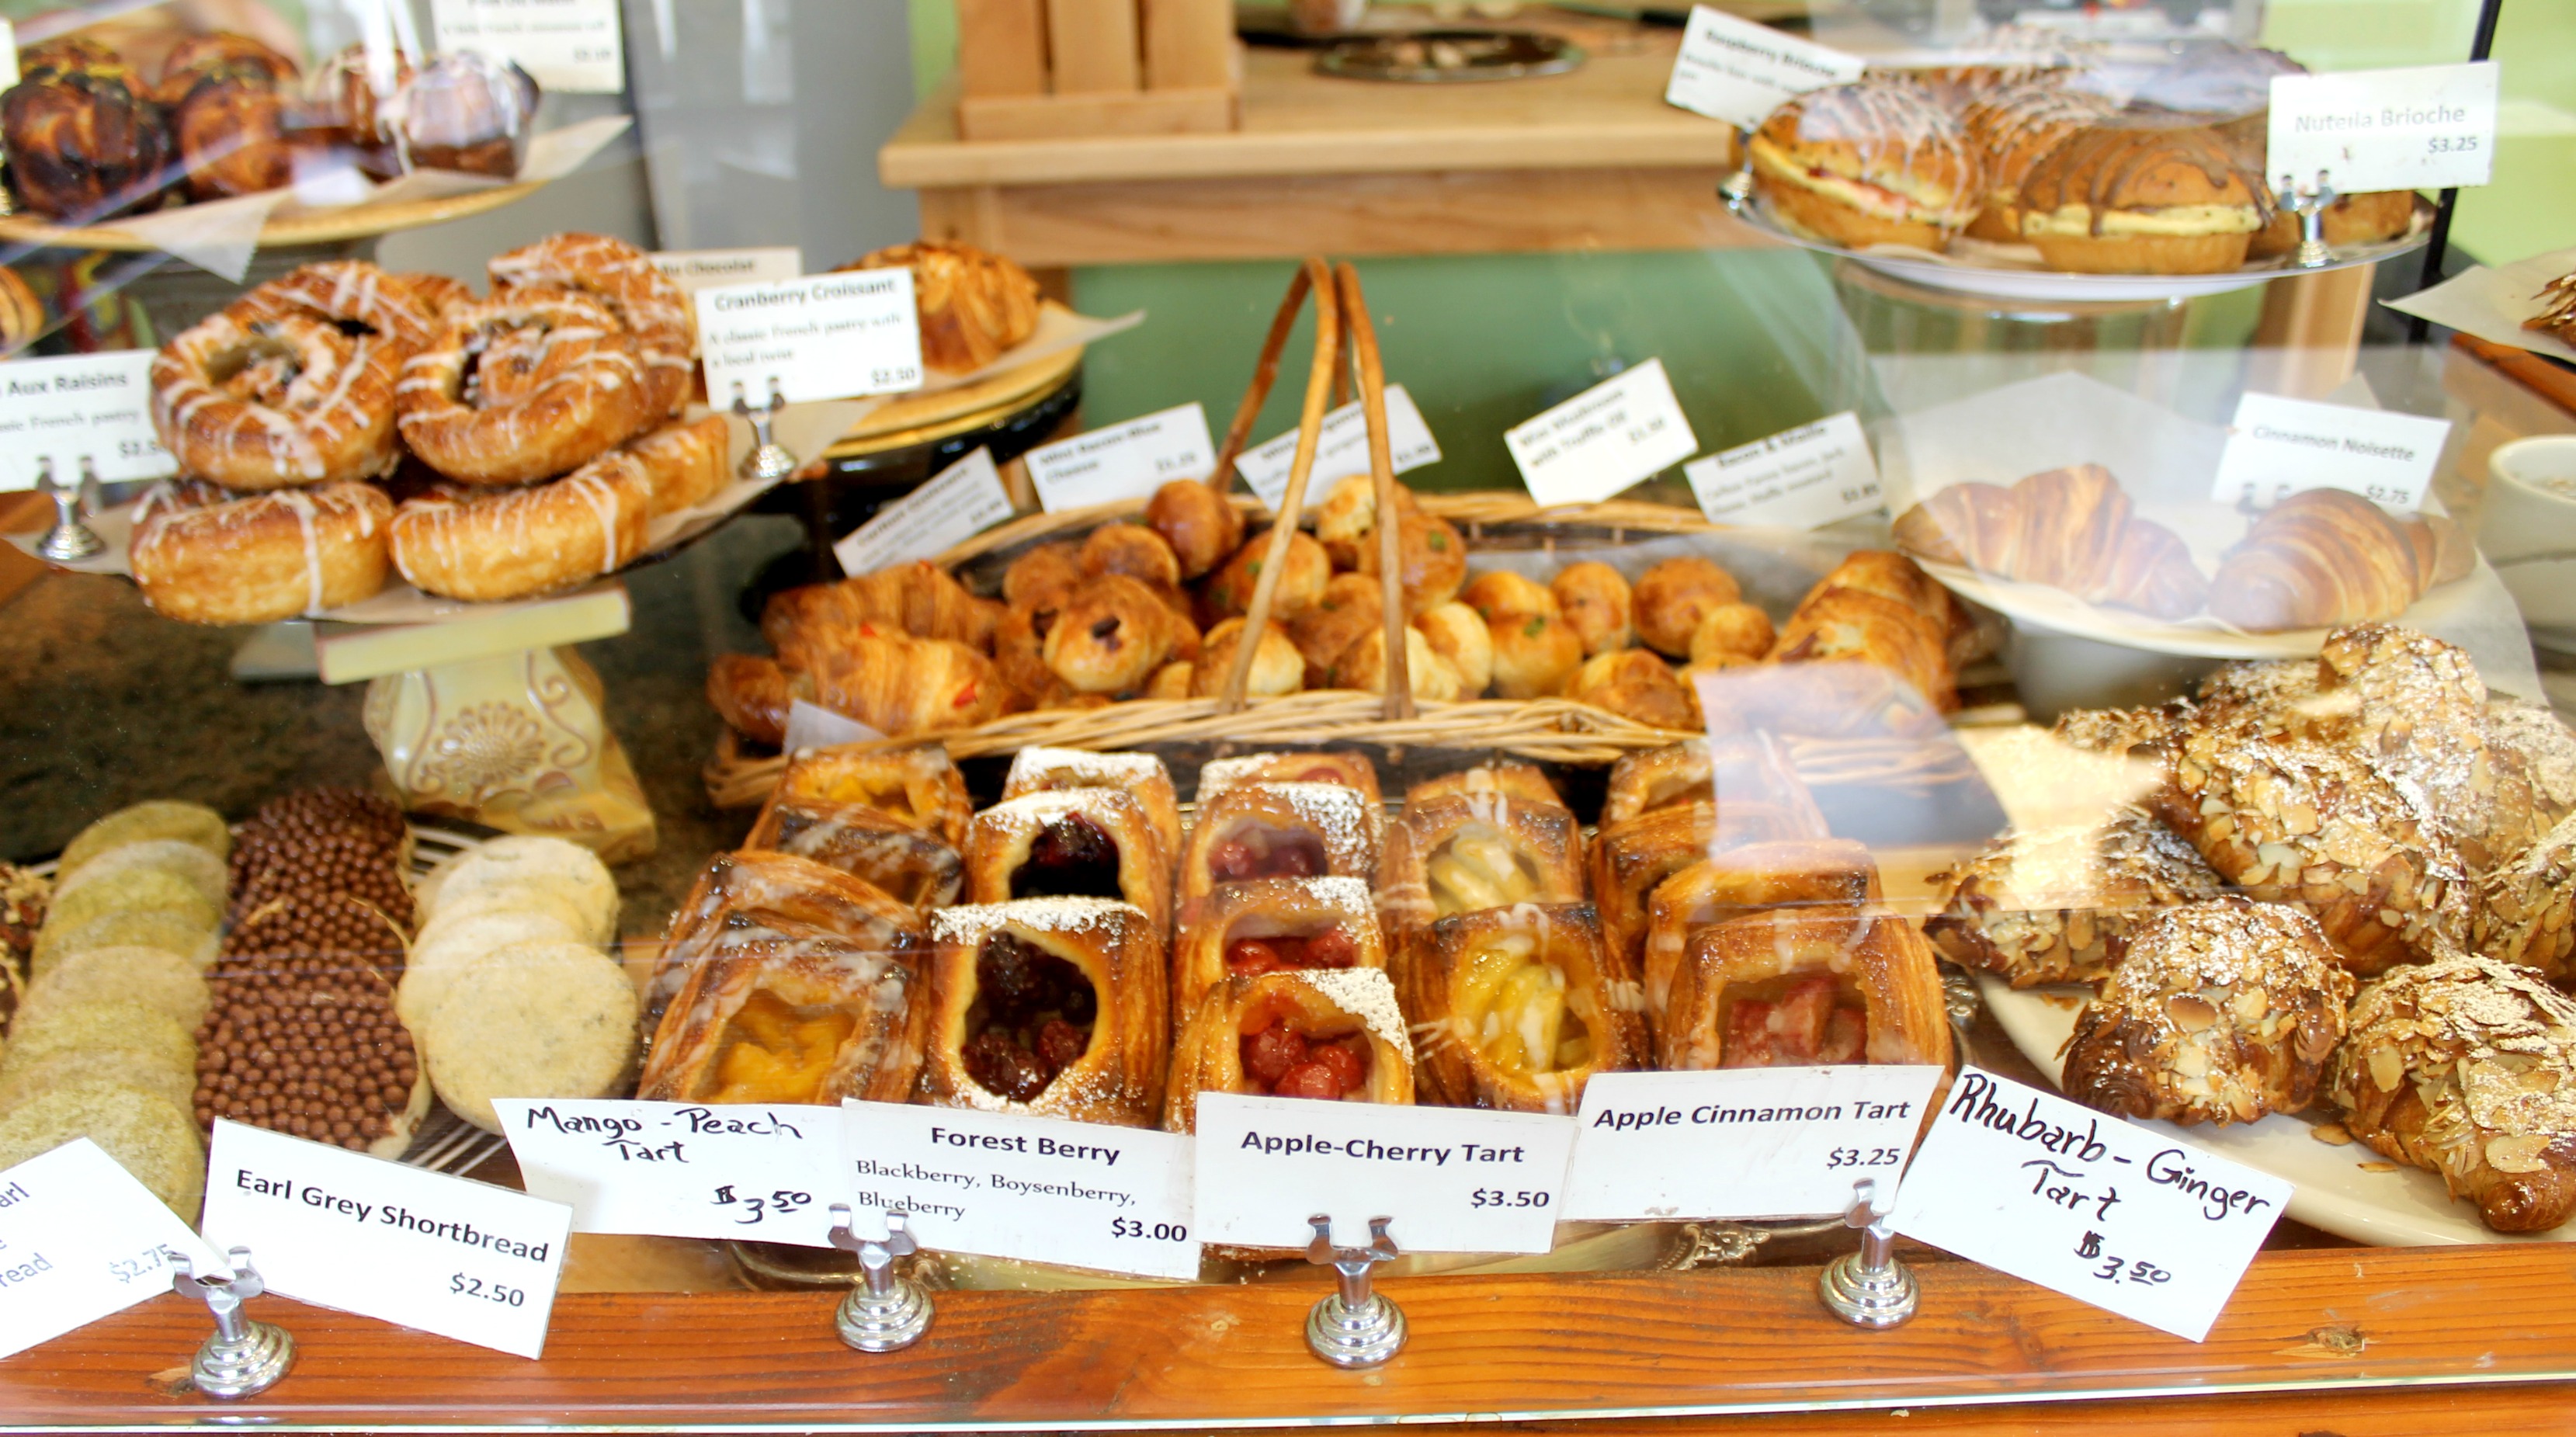 carlton bakery pastries